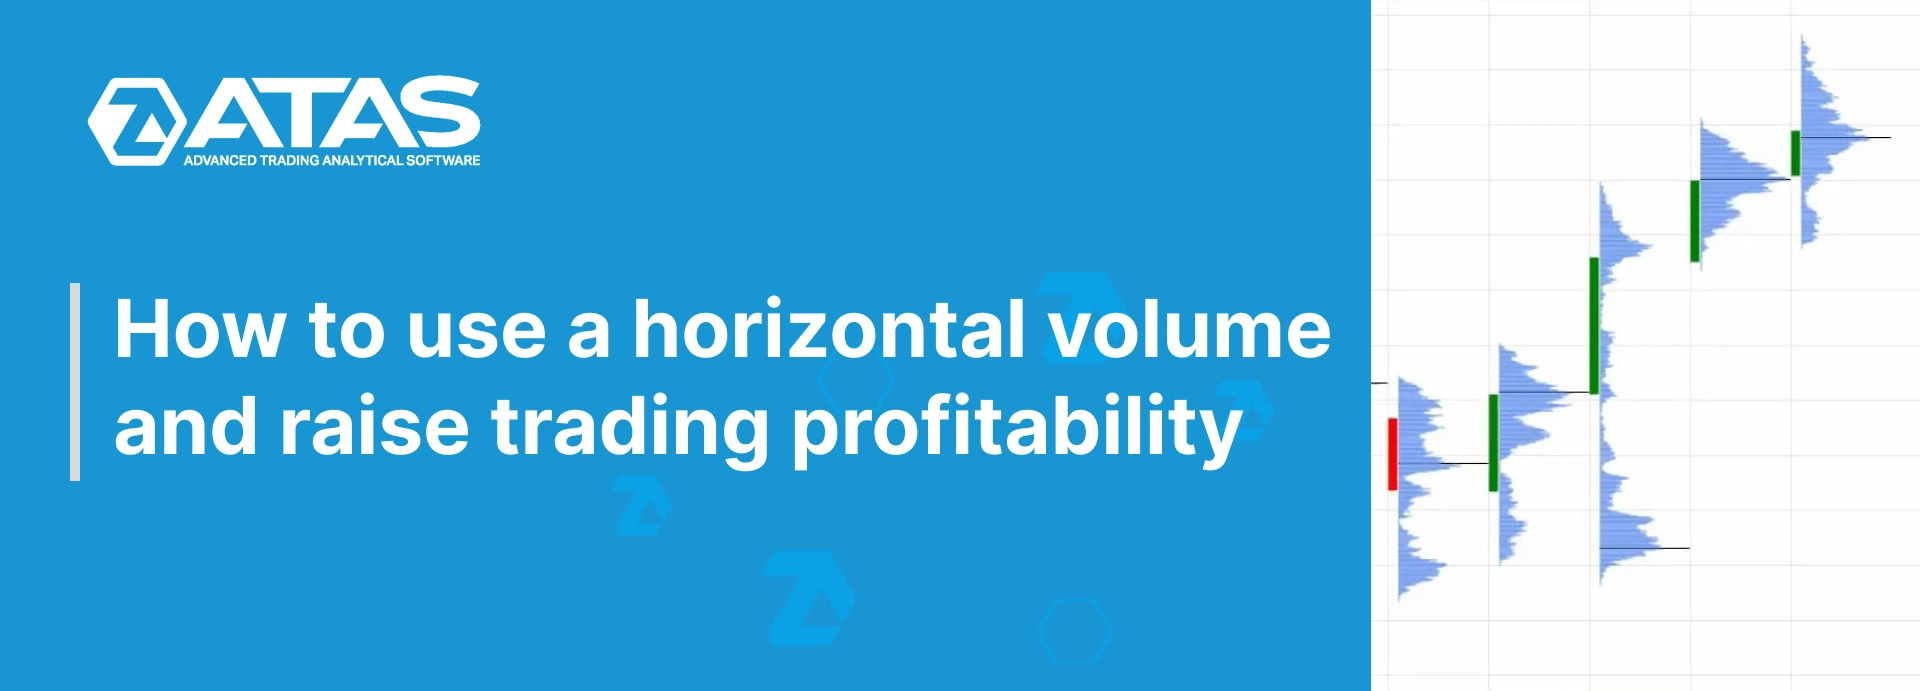 How to use a horizontal volume and raise trading profitability